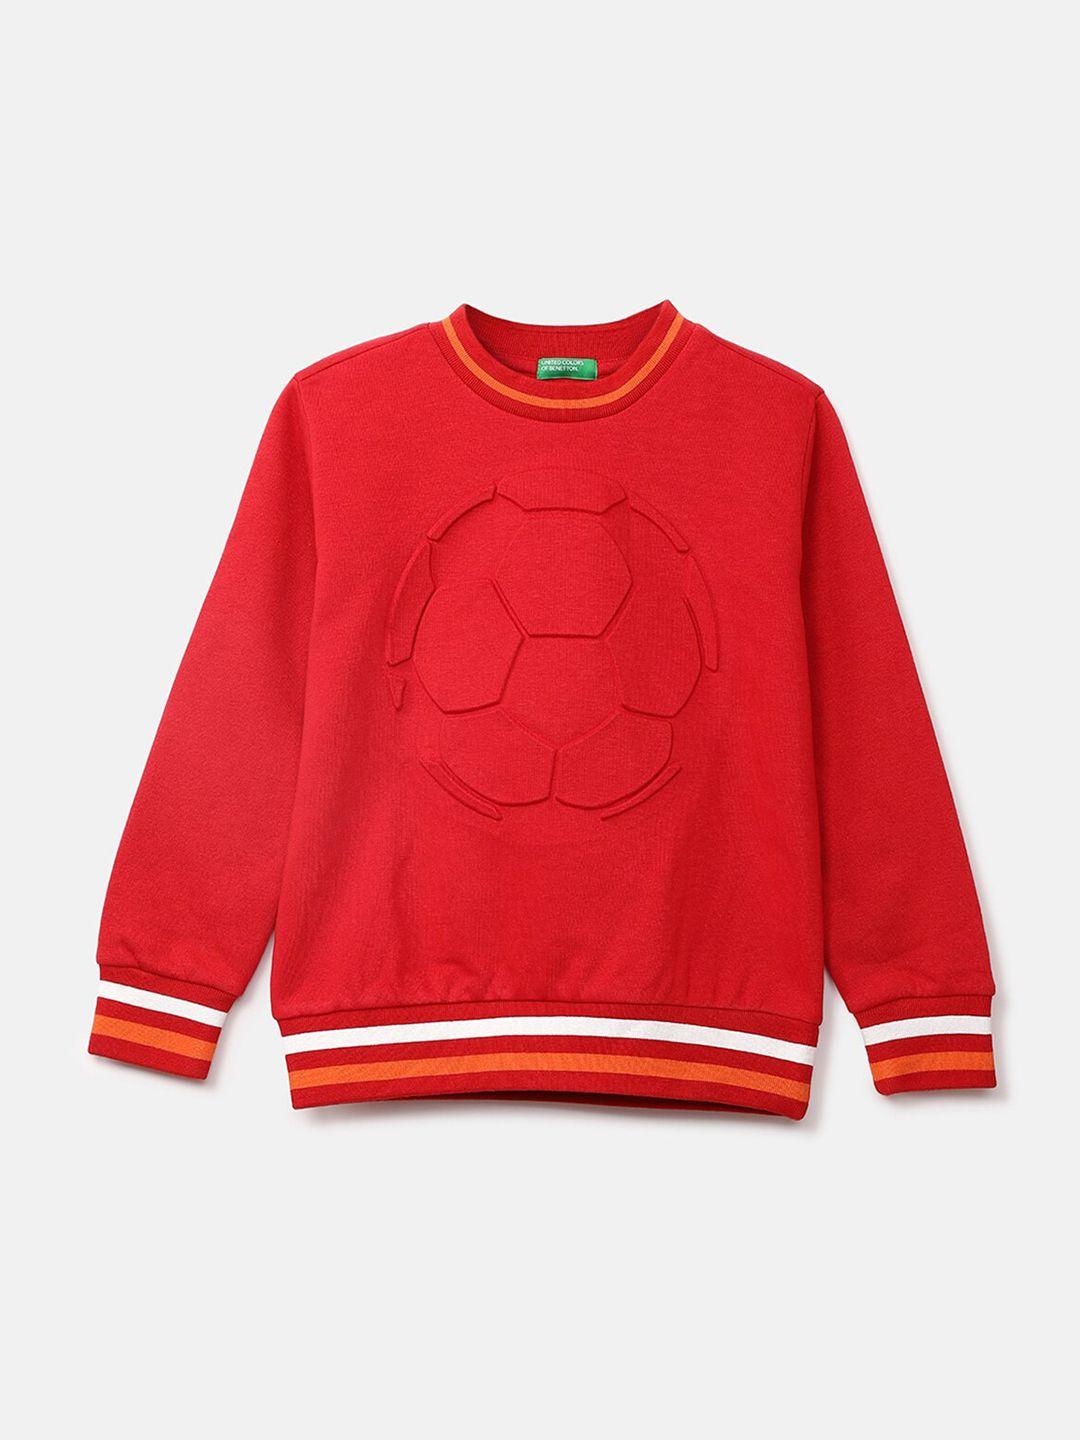 united-colors-of-benetton-boys-red-sweatshirt